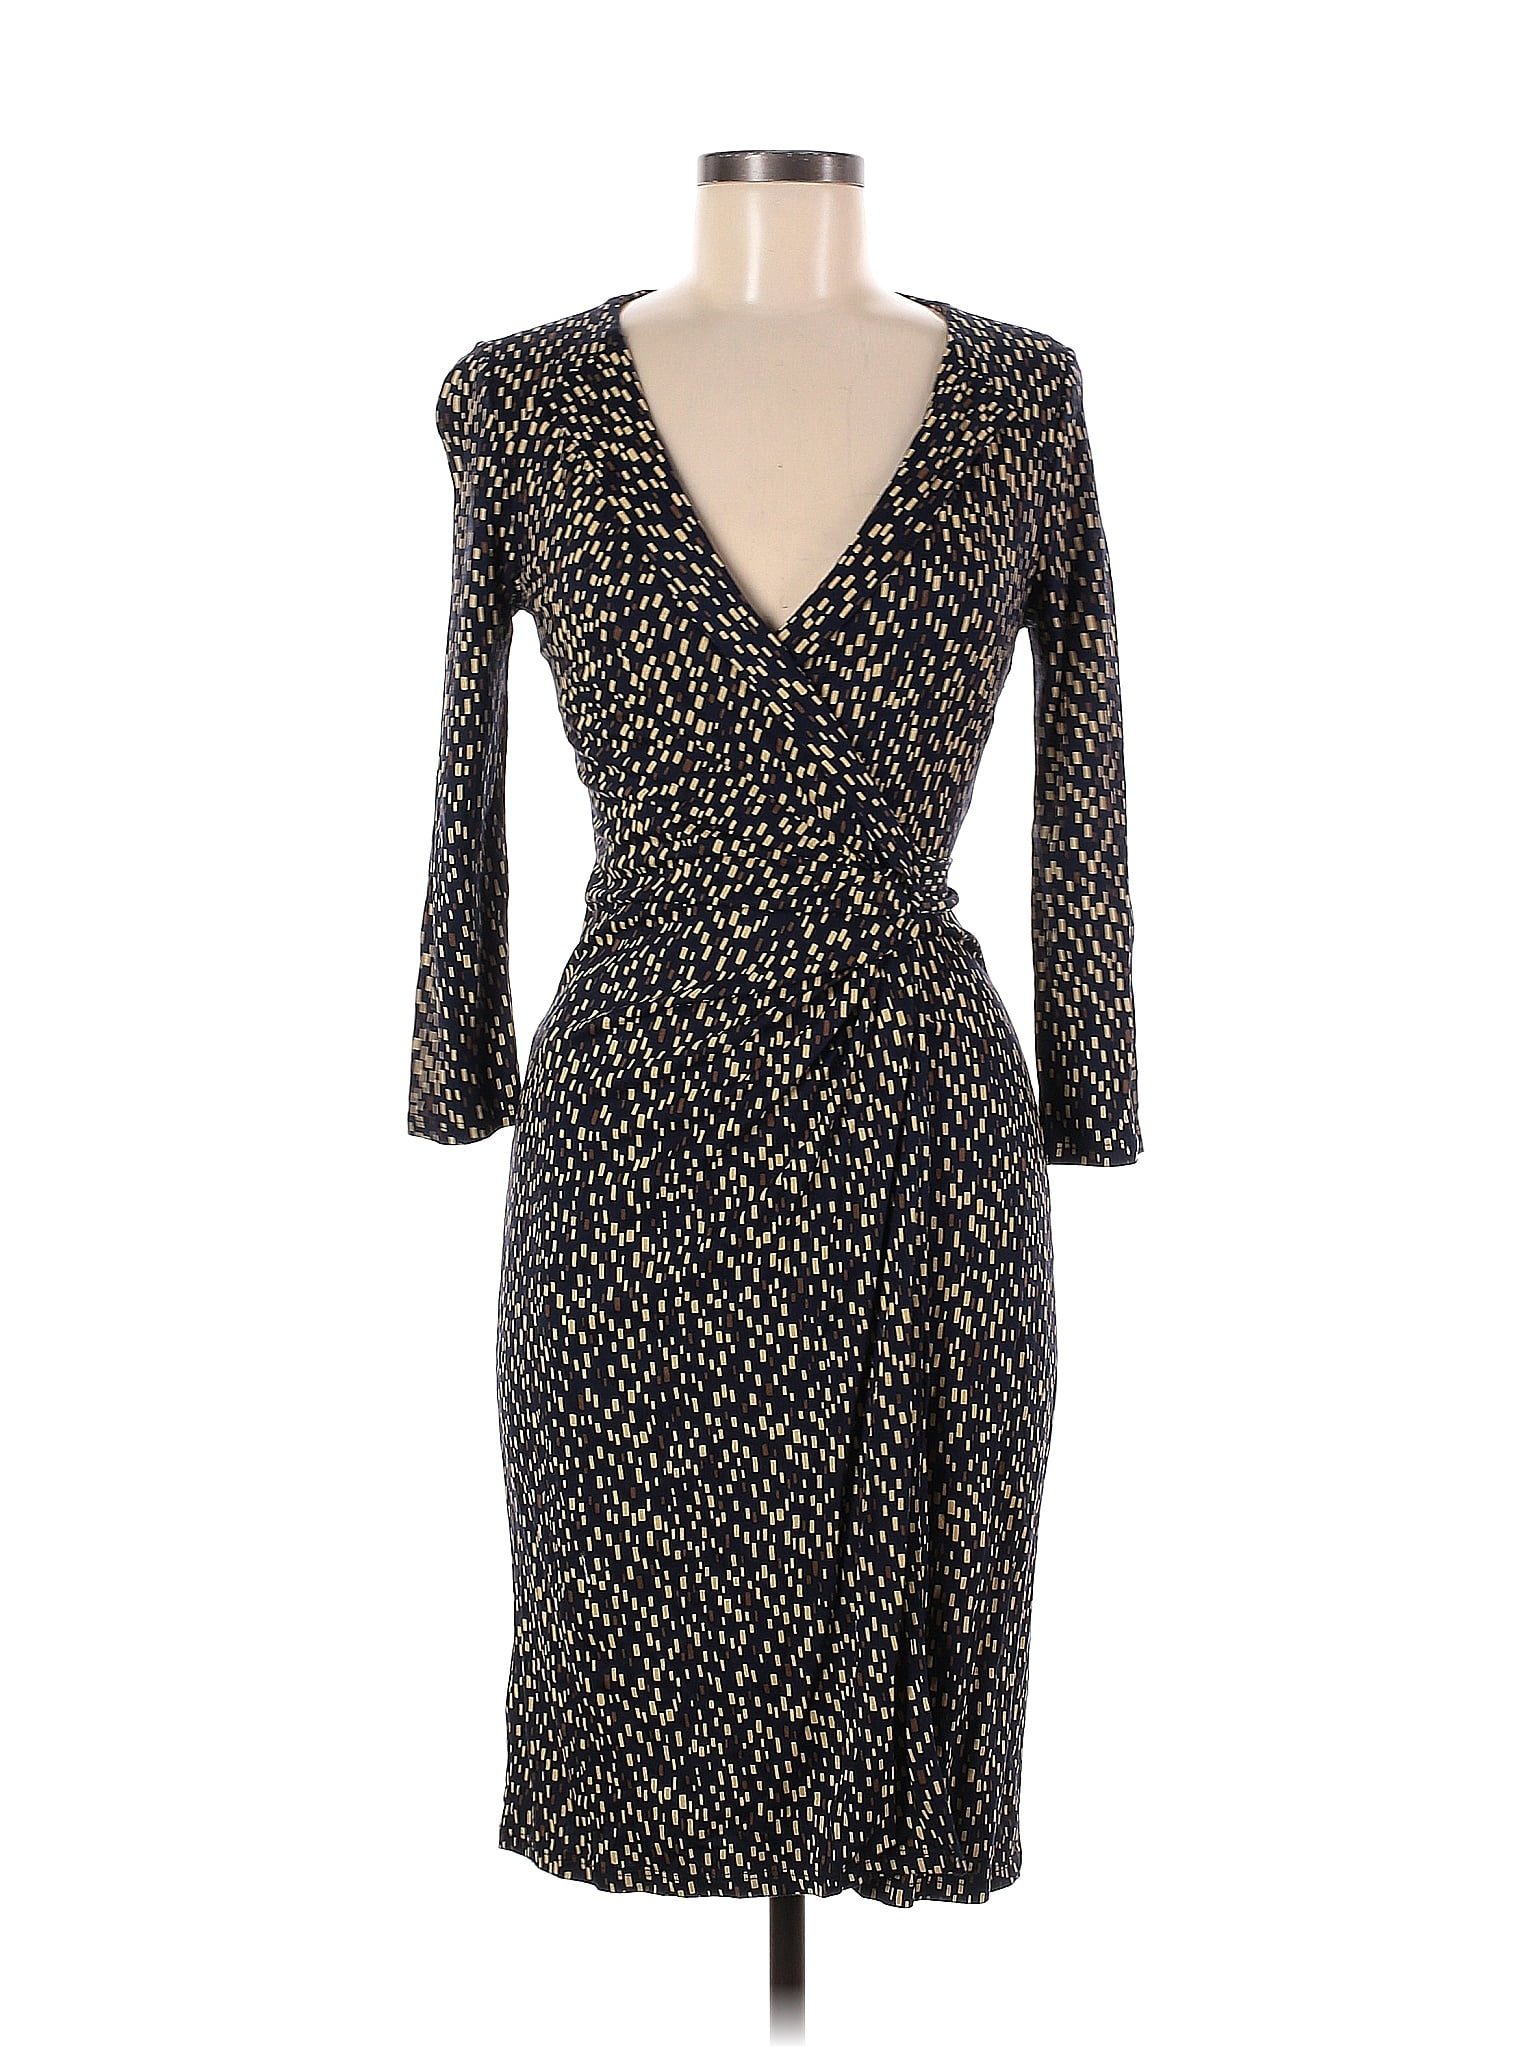 Ann Taylor Multi Color Black Casual Dress Size XS - 73% off | thredUP